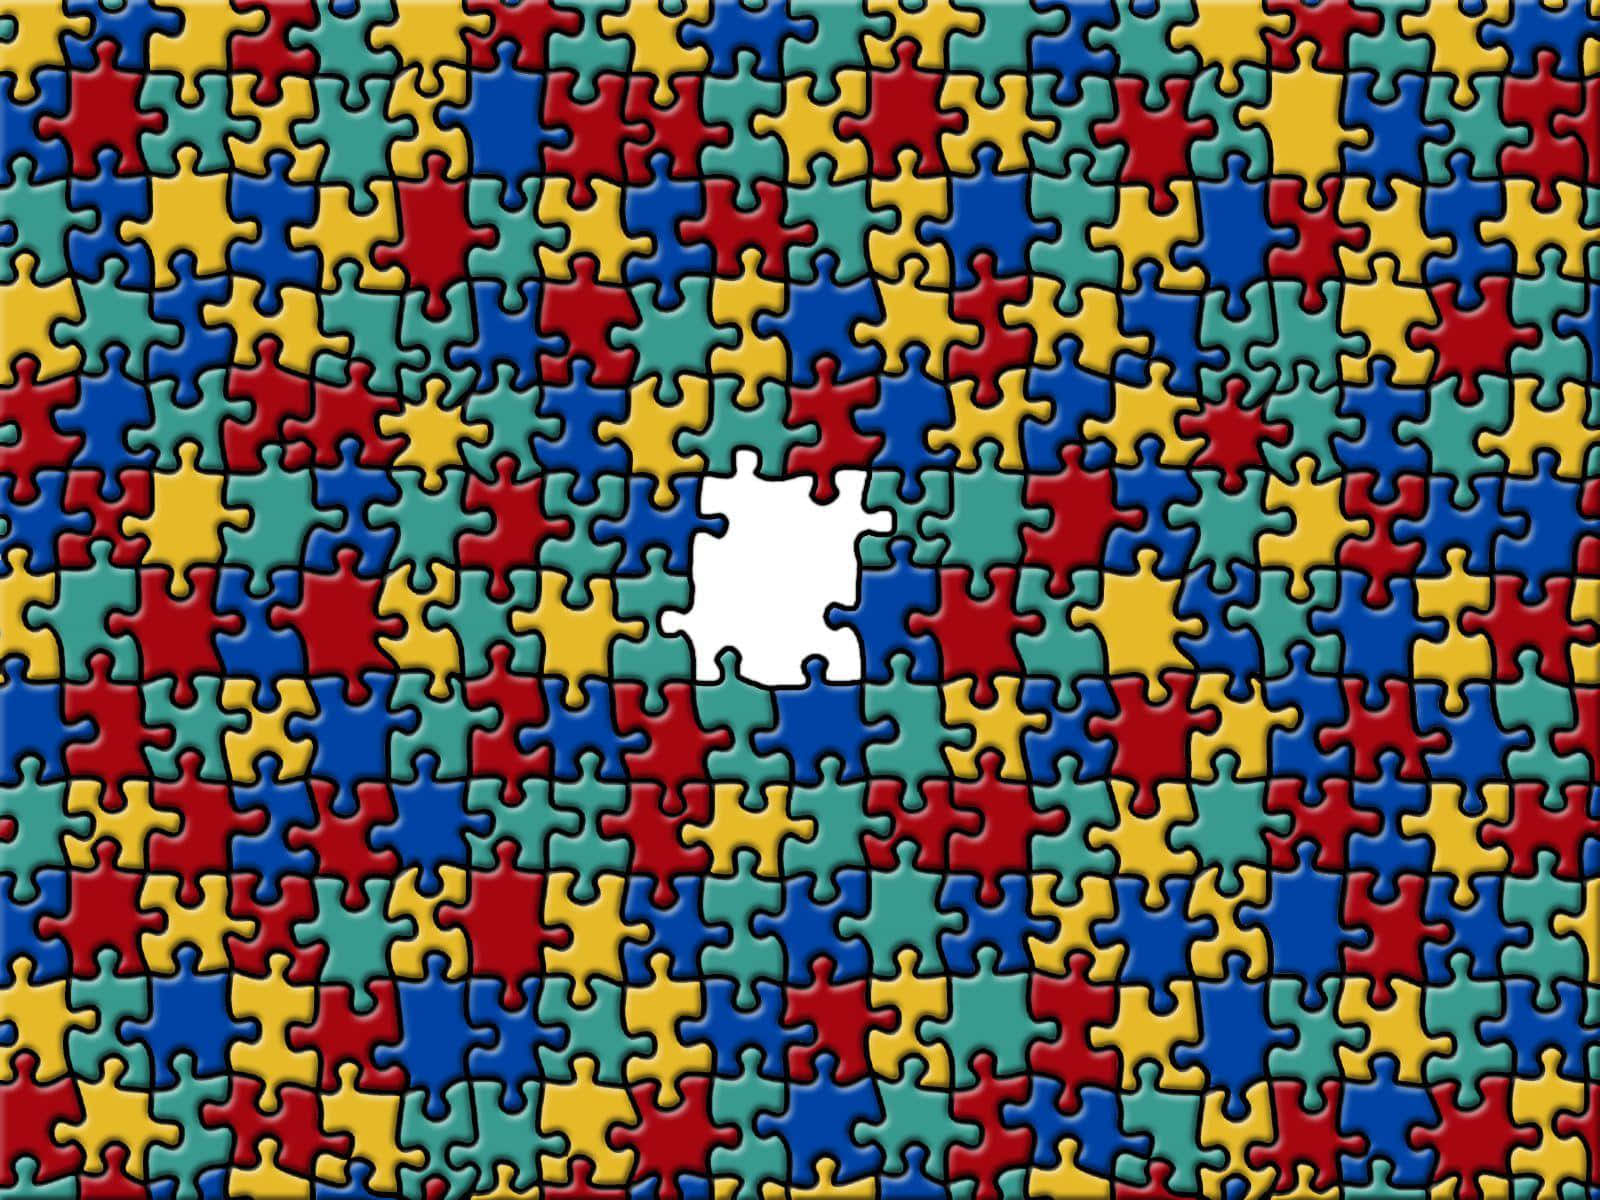 autism puzzle background